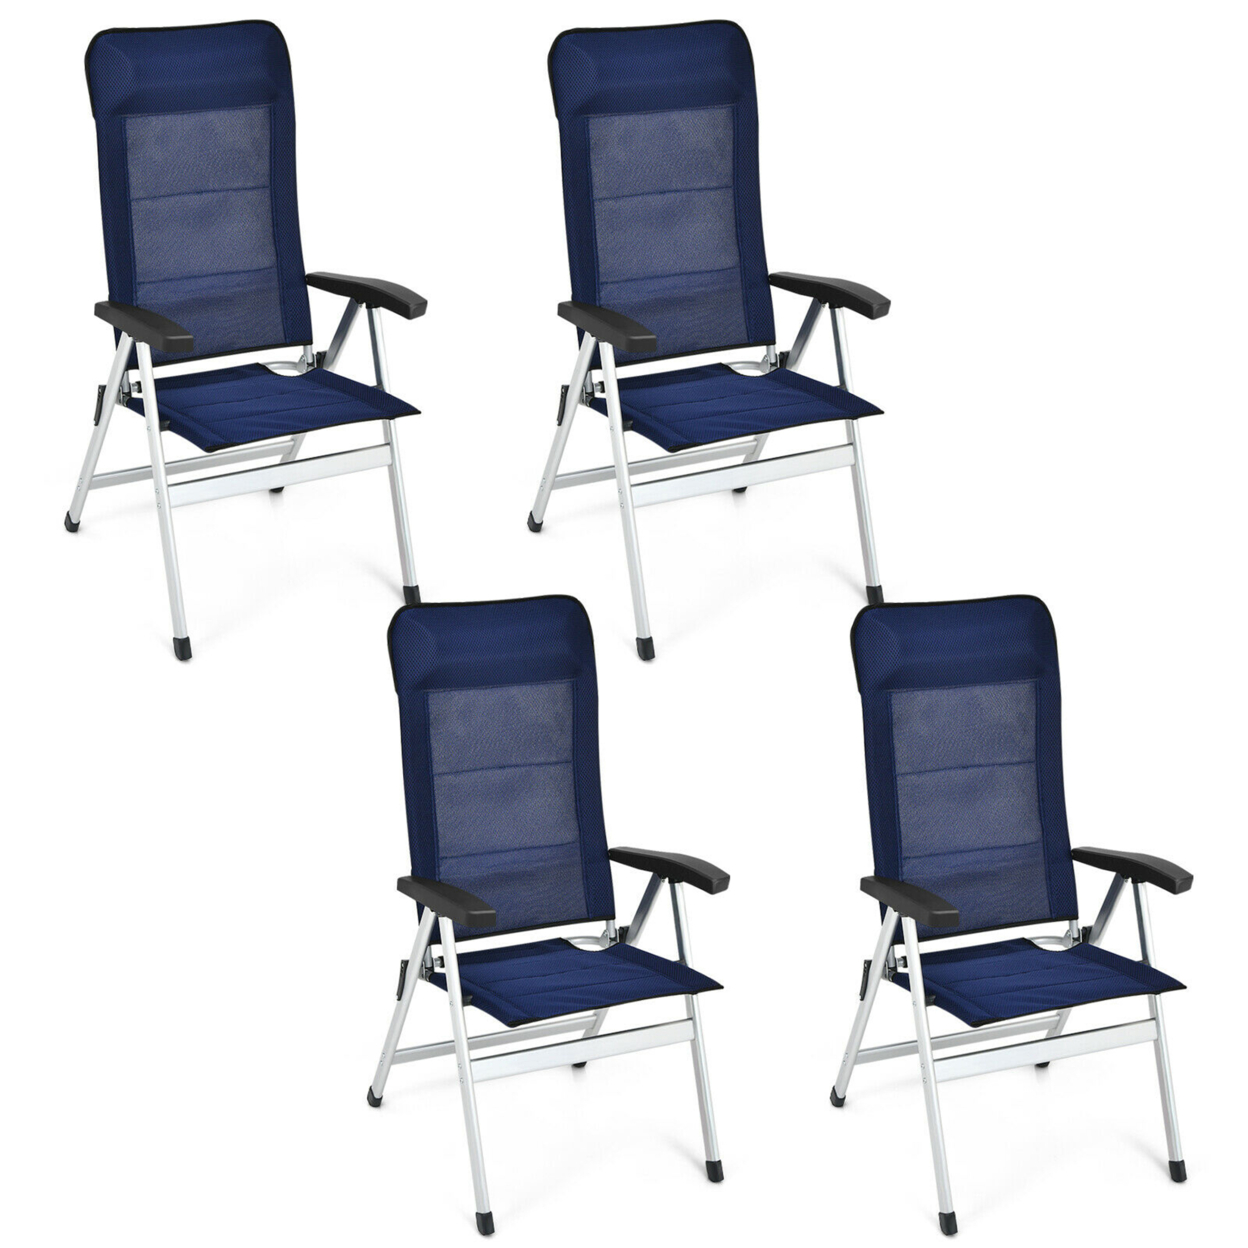 4PCS Patio Dining Chair Aluminum Camping Adjust Portable Headrest Navy